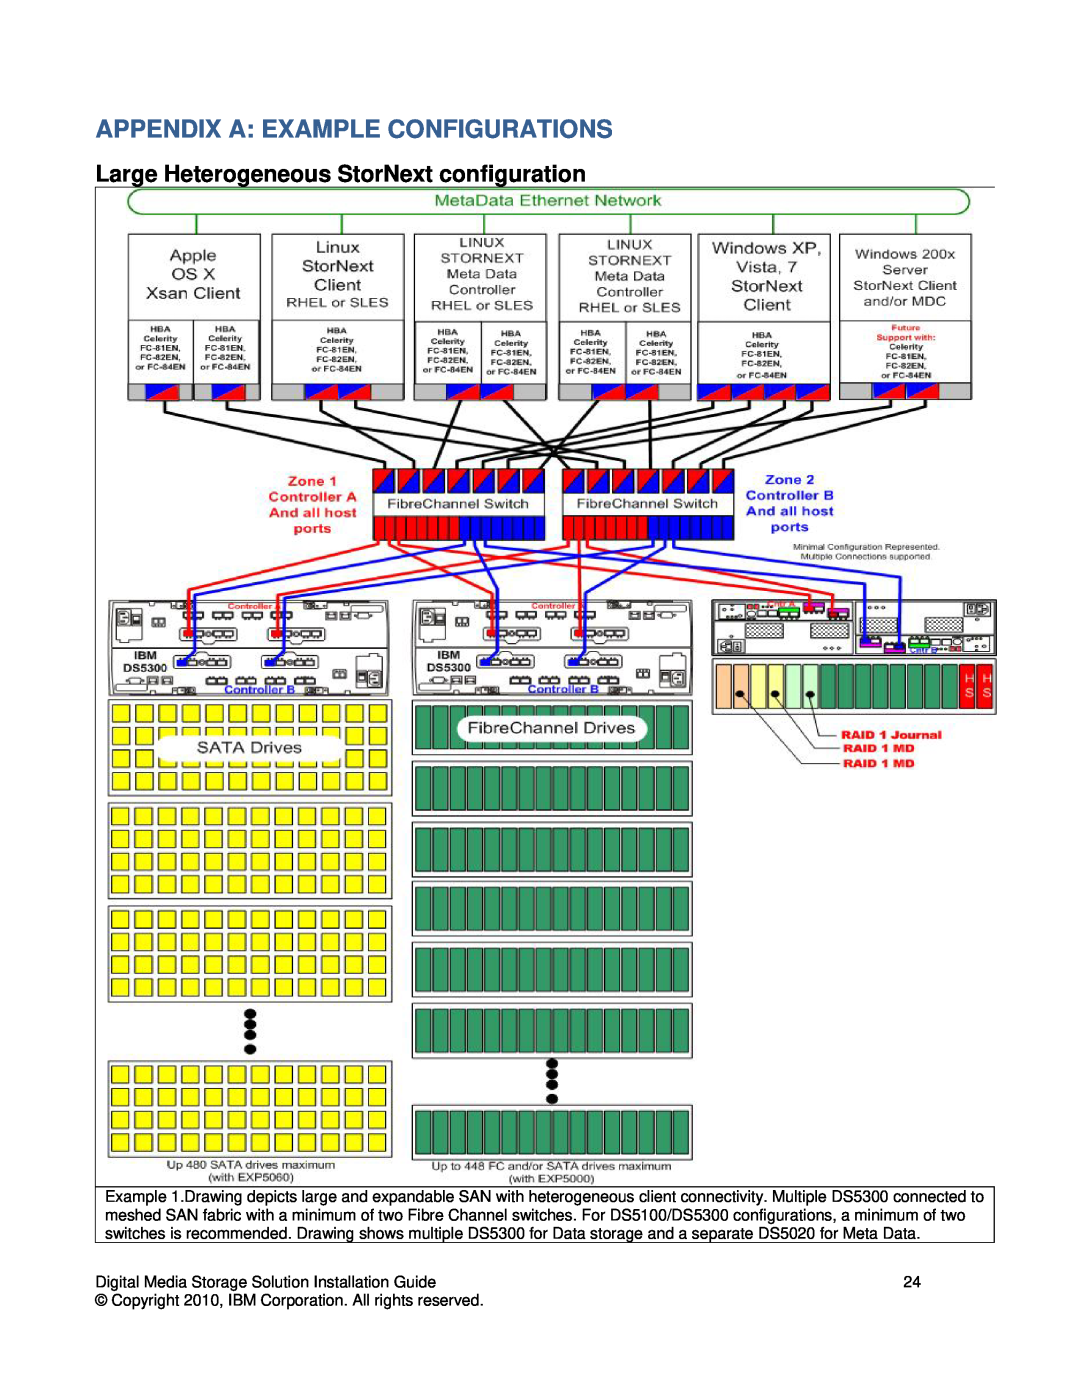 IBM DS3000 manual Appendix A Example Configurations, Large Heterogeneous StorNext configuration 